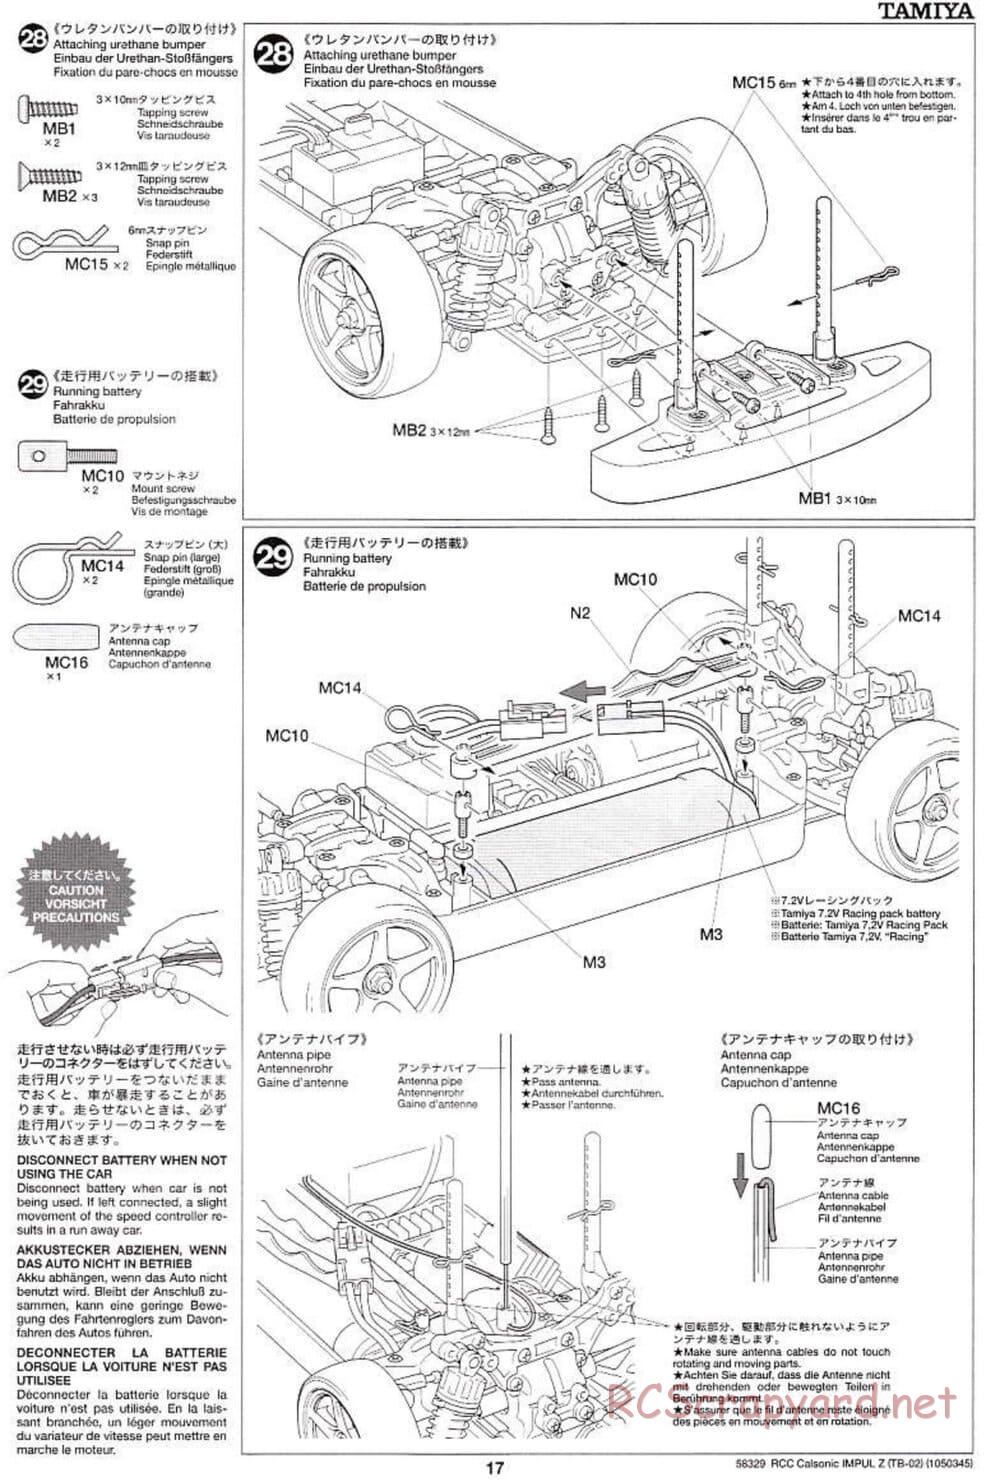 Tamiya - Calsonic Impul Z - TB-02 Chassis - Manual - Page 17